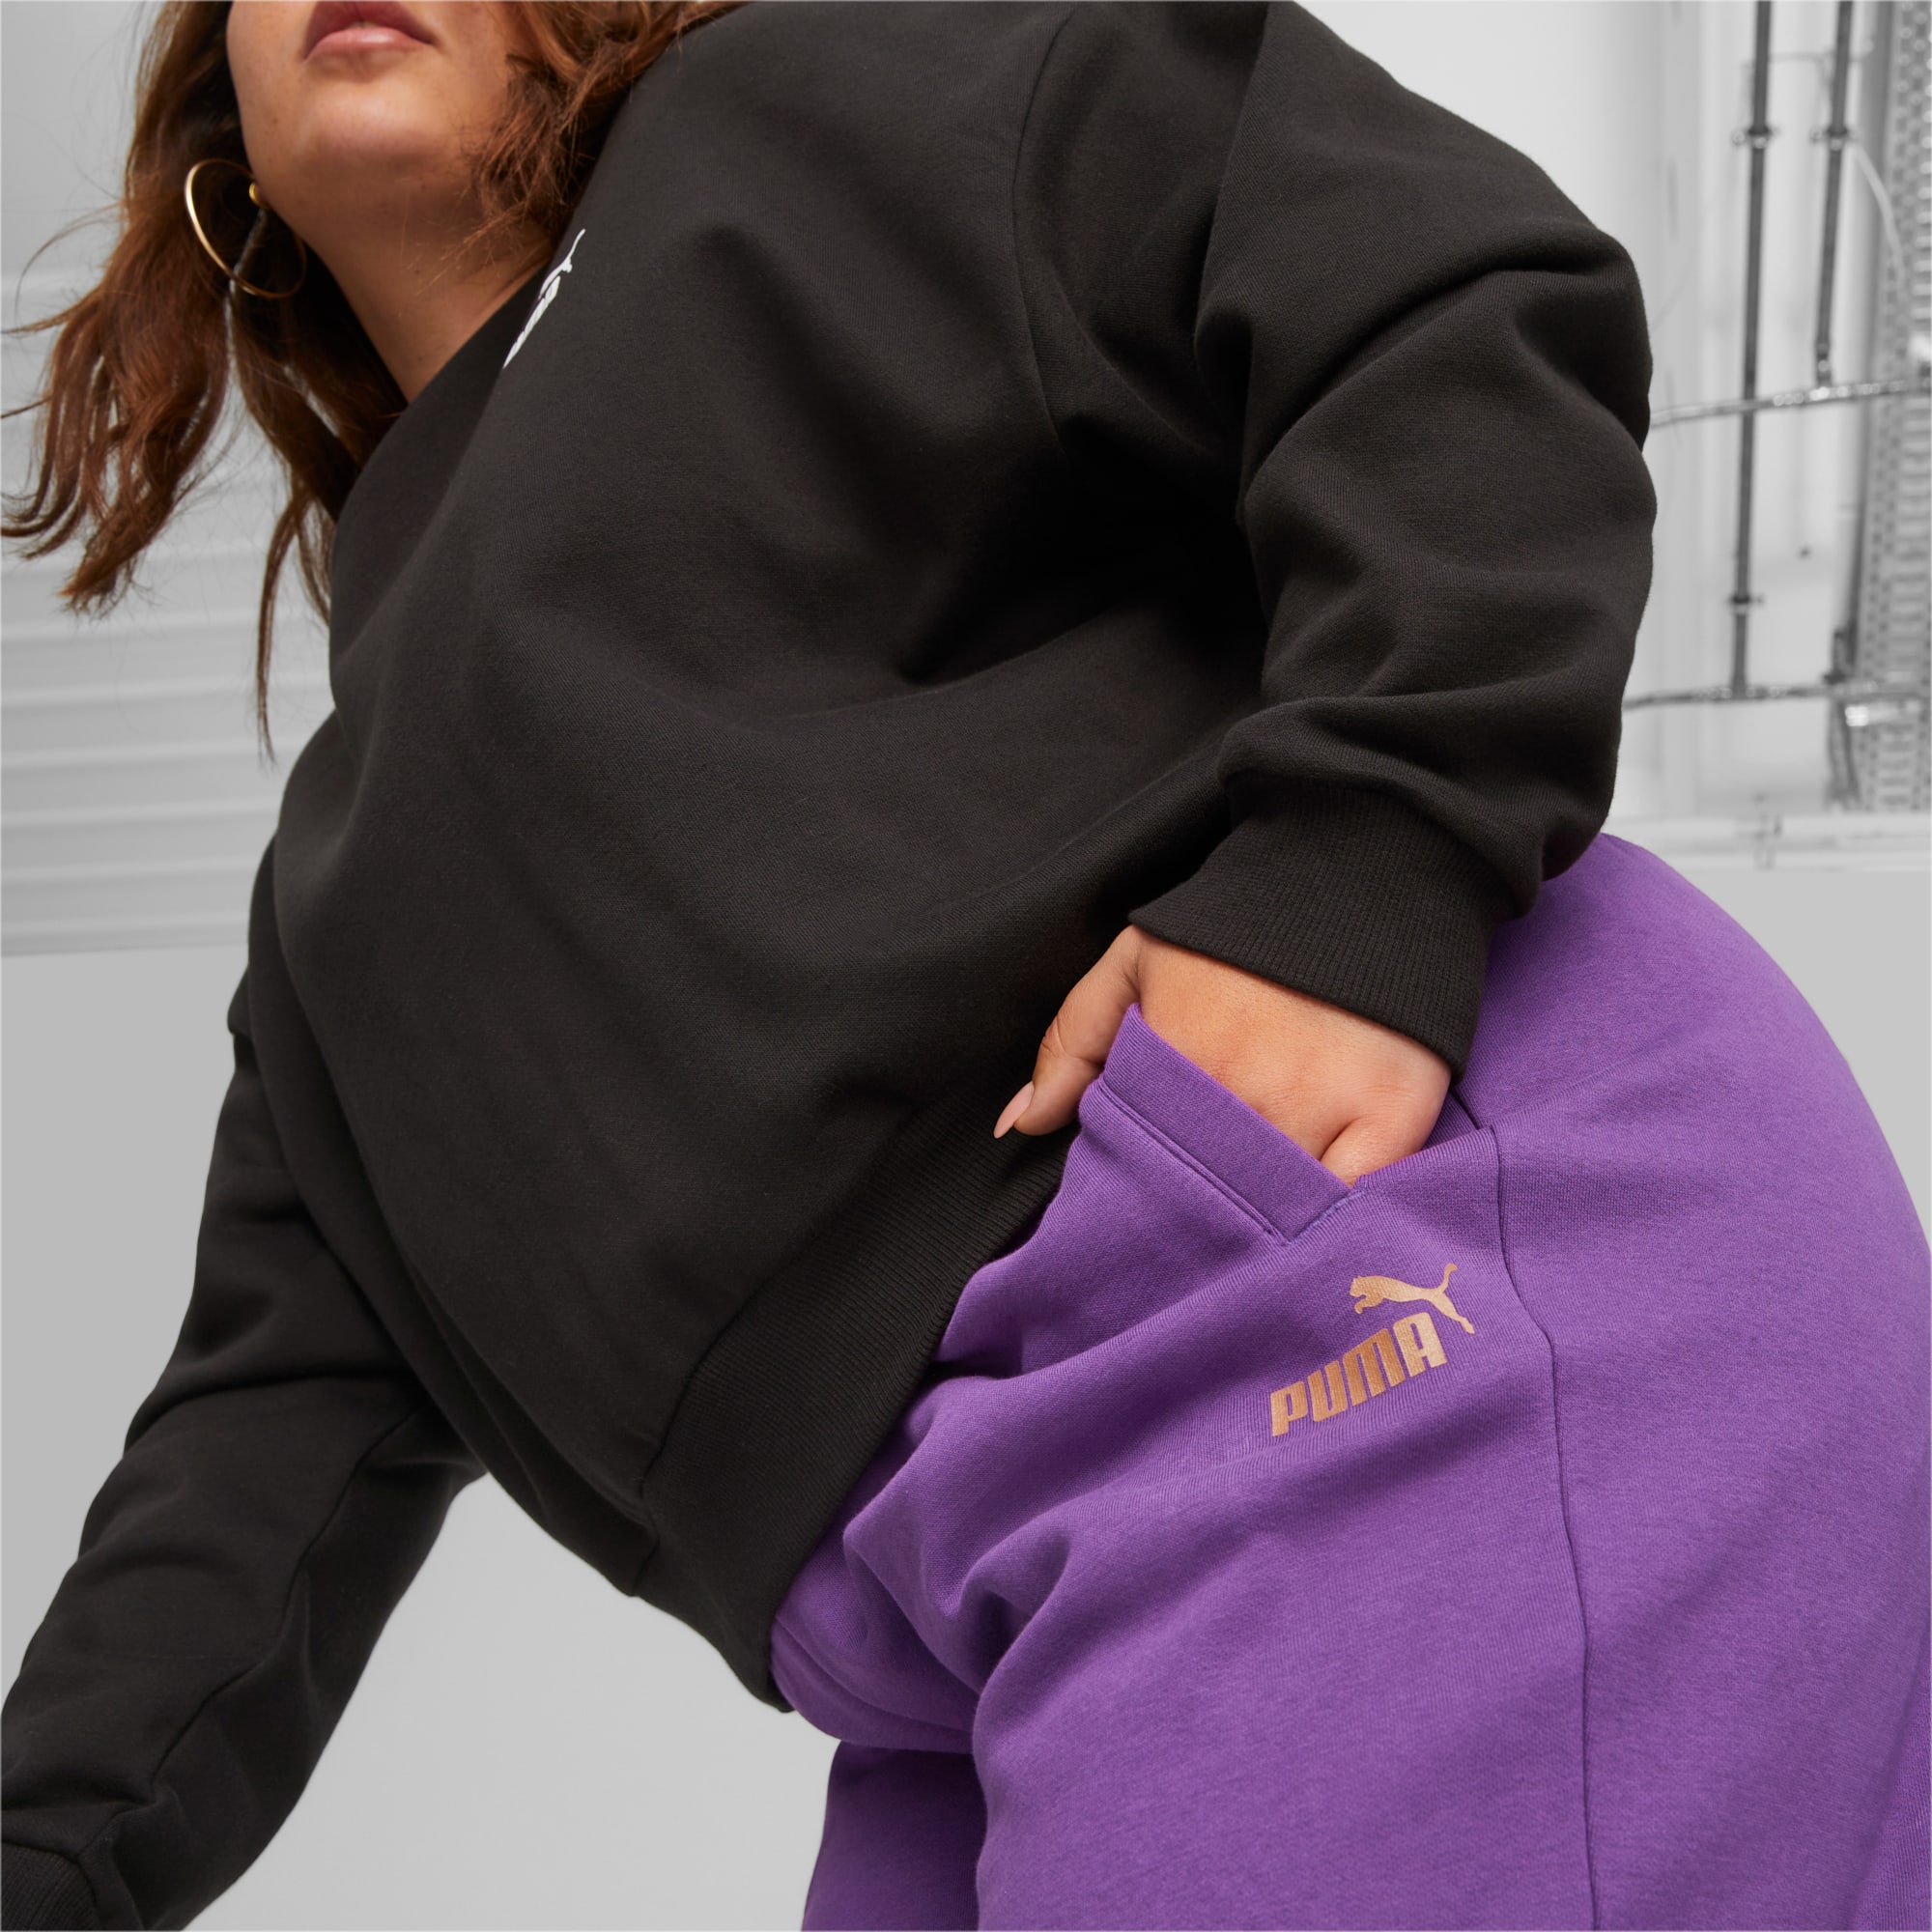 PUMA Power Logo Love Women's Sweatpants, Purple Pop, Size XS, Clothing